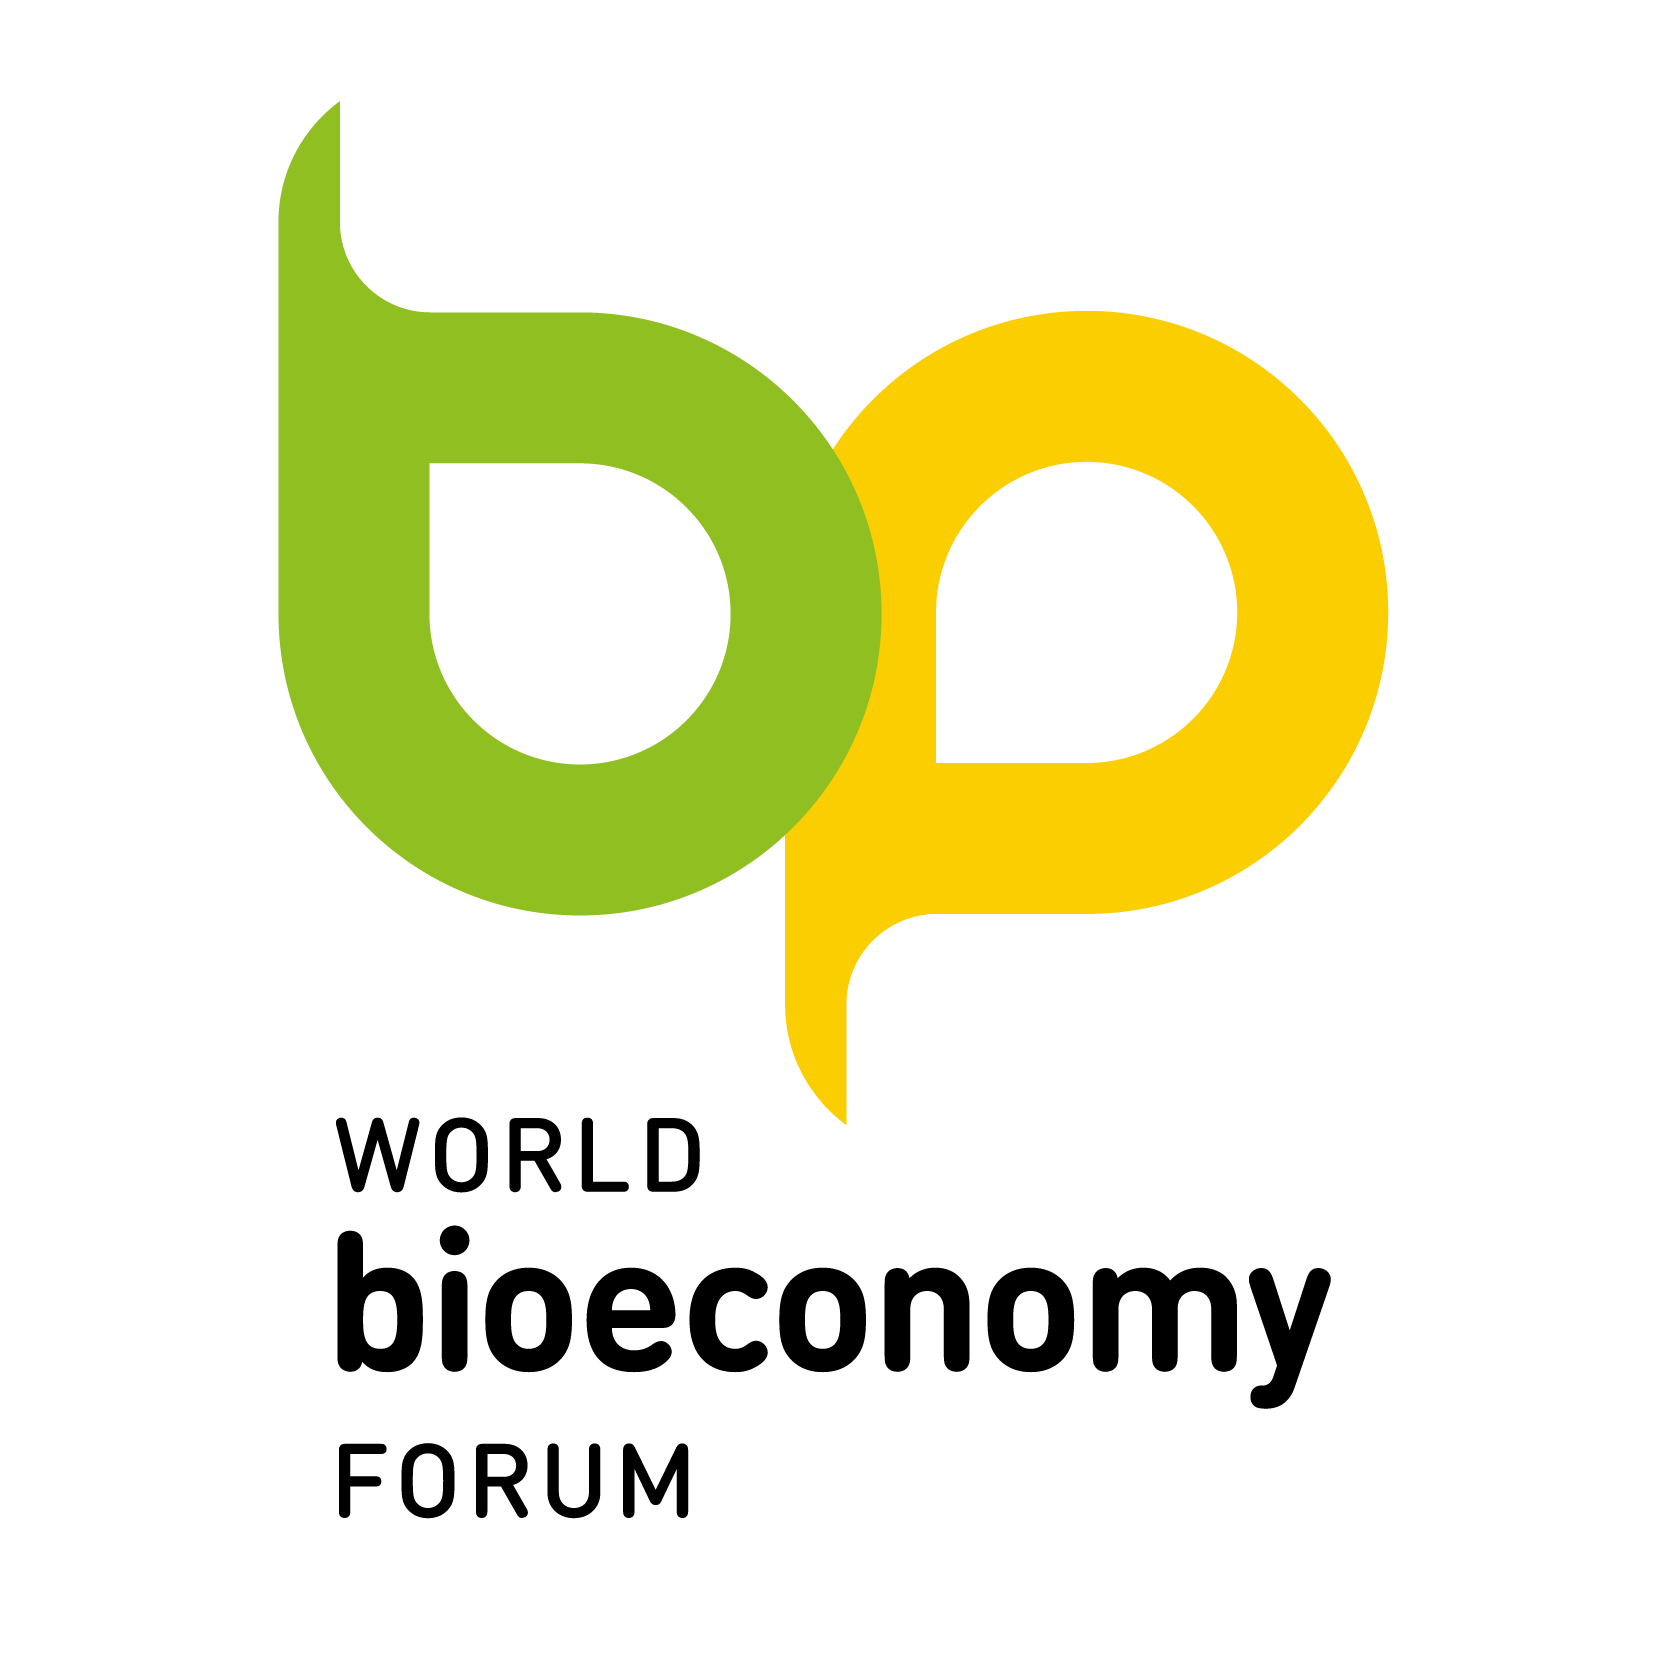 Forum Logo - Logo & Image Bioeconomy Forum